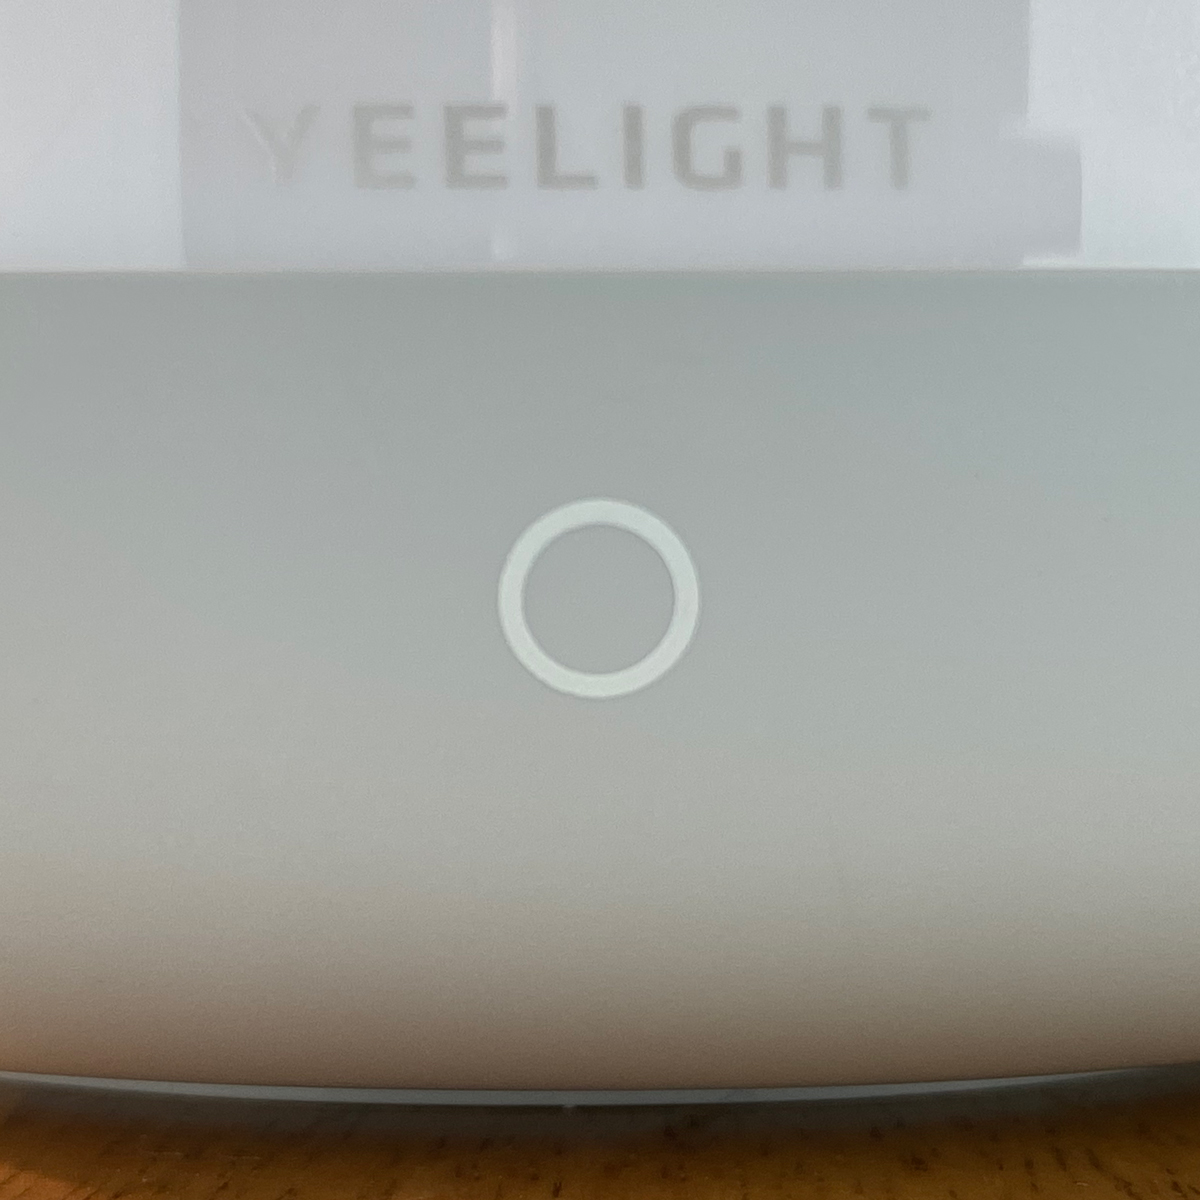 1583245516 553 Yeelight Bedside Lamp D2 review